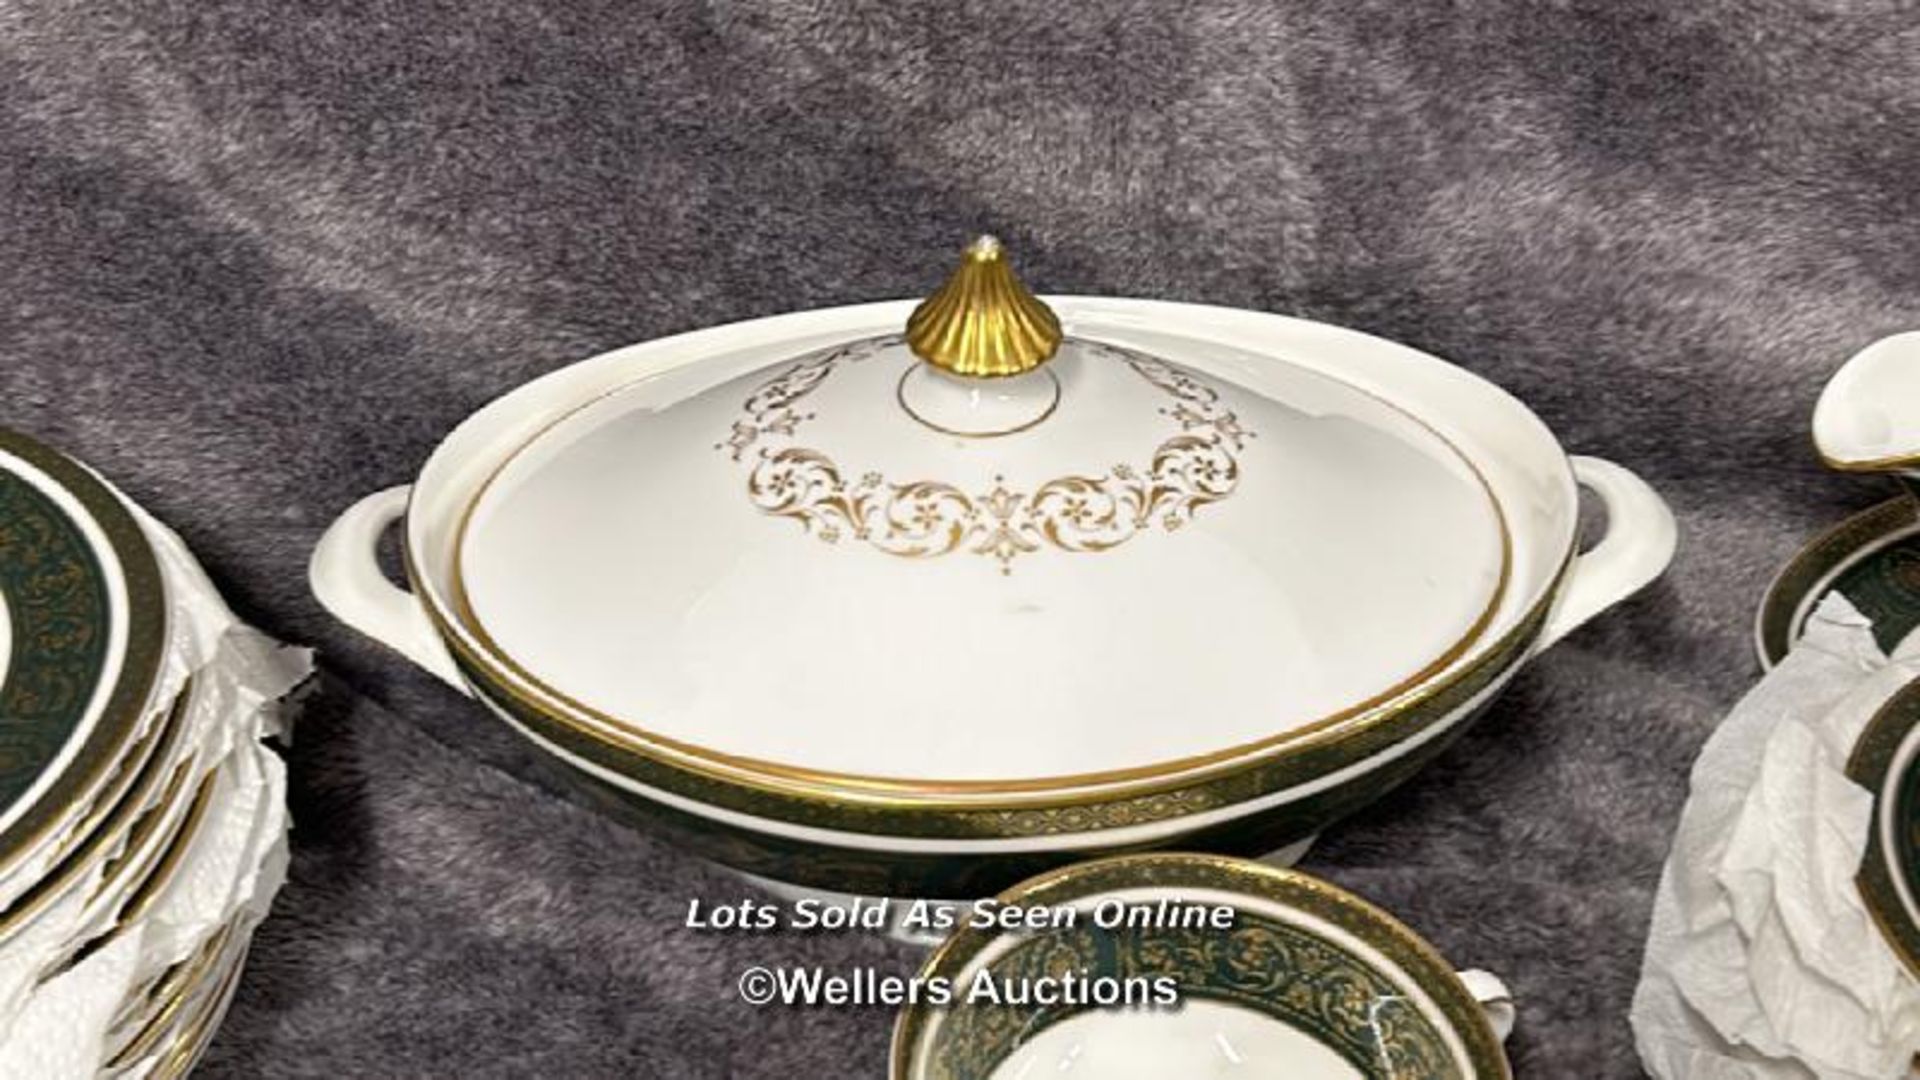 Royal Doulton "Vanborough" dinner service including 10 dinner plates, 15 tea plates, 10 side plates, - Image 6 of 8